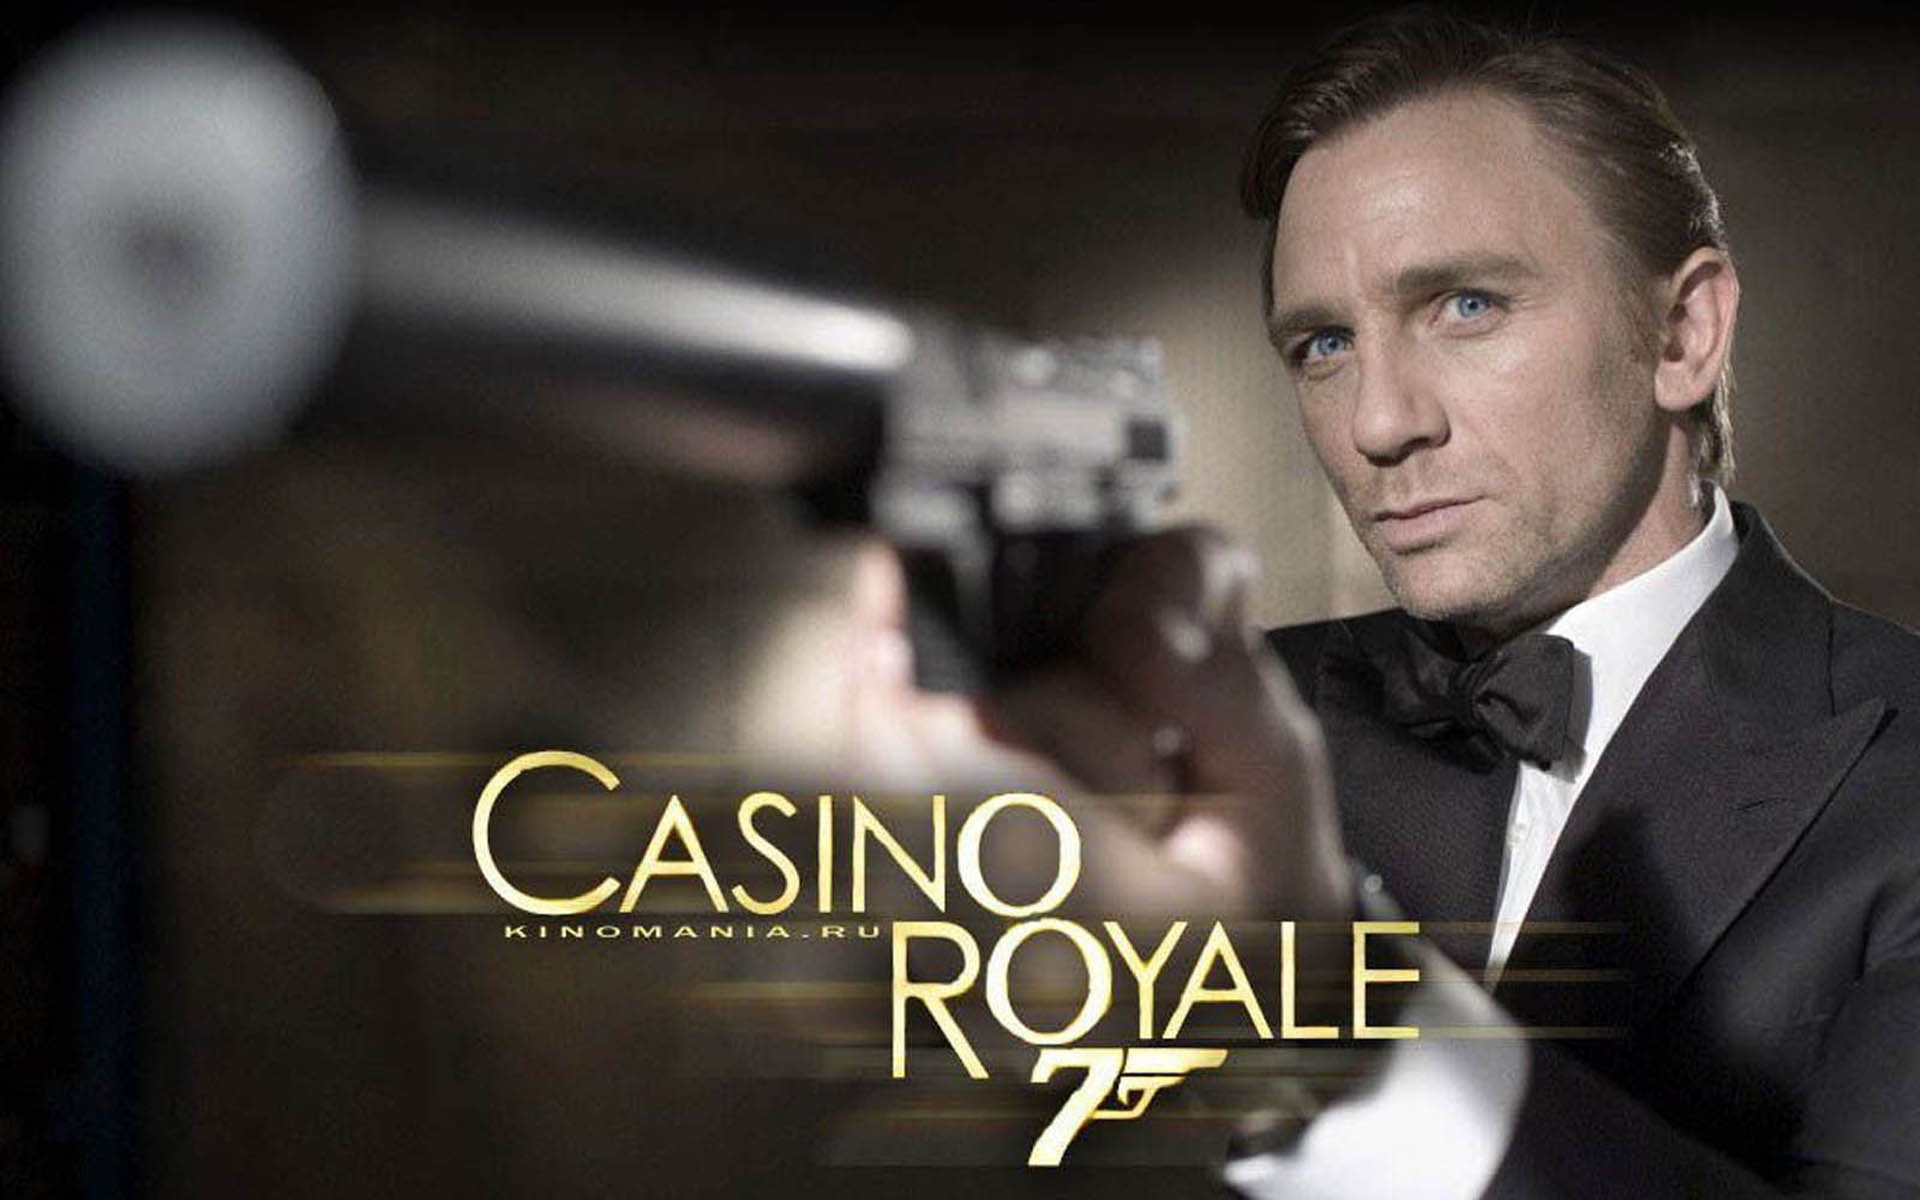 james bond movies casino royale climax trailer